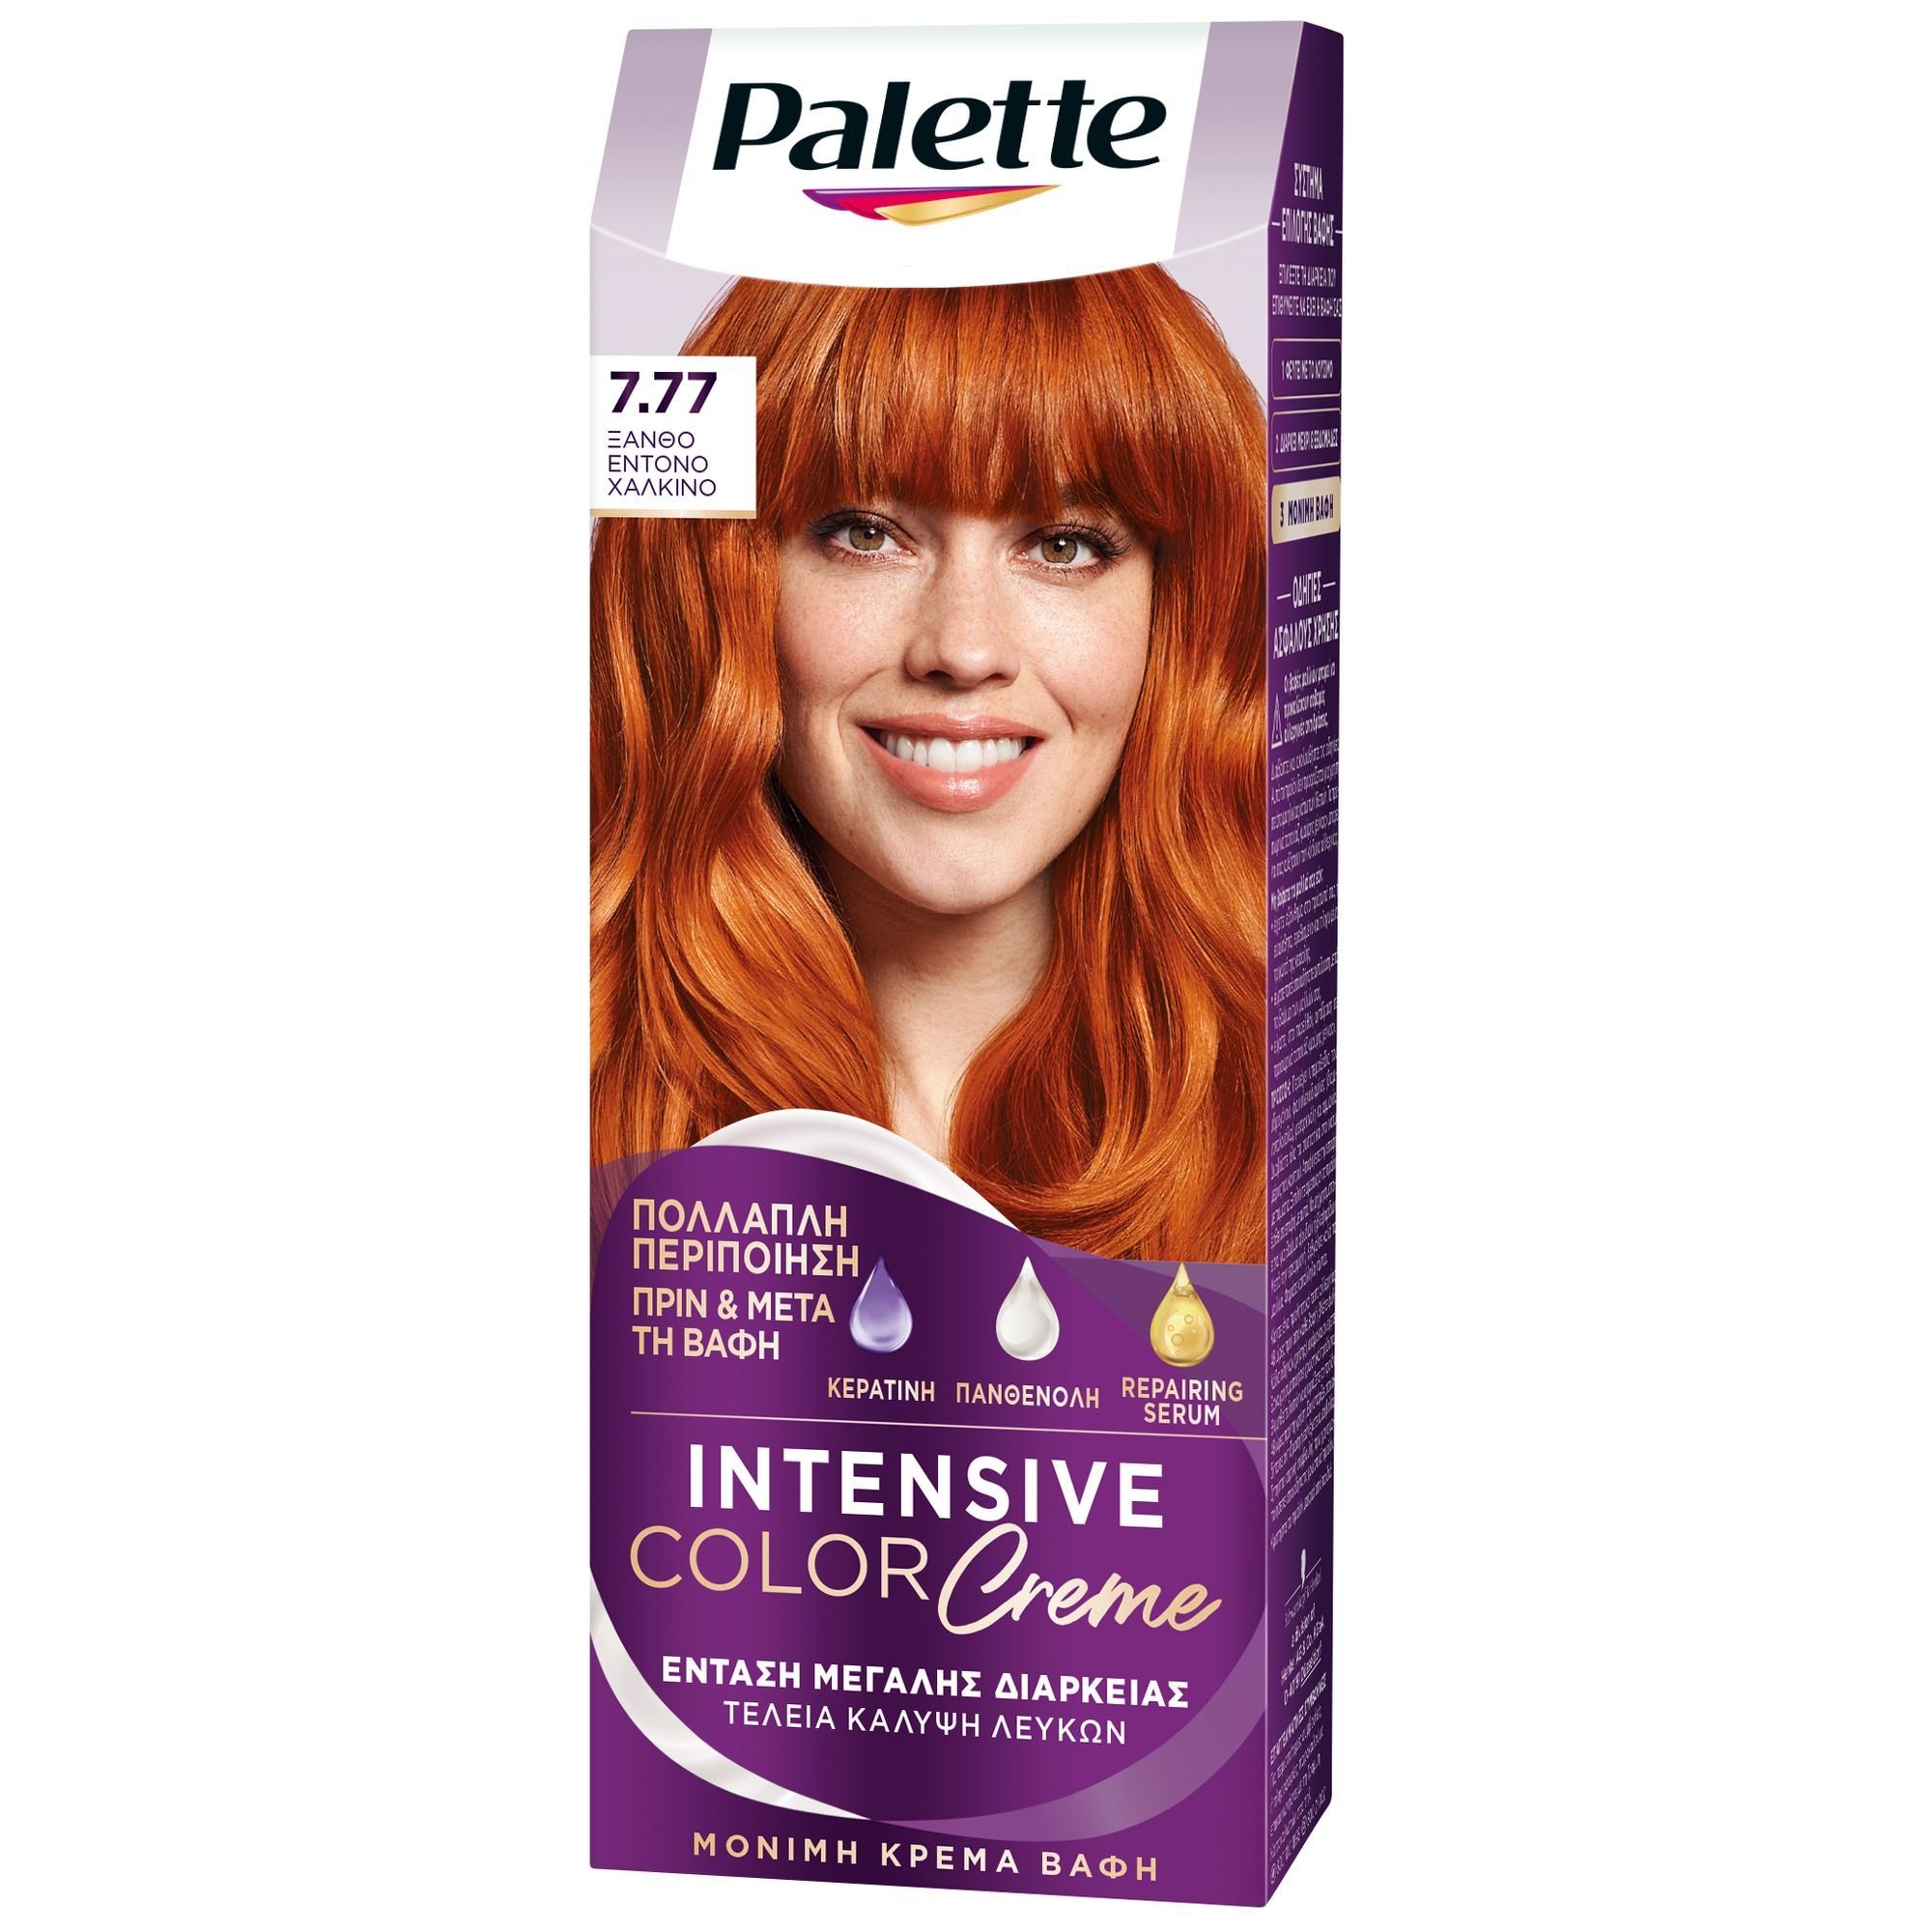 Schwarzkopf Palette Intensive Hair Color Creme Kit Μόνιμη Κρέμα Βαφή Μαλλιών για Έντονο Χρώμα Μεγάλης Διάρκειας & Περιποίηση 1 Τεμάχιο – 7.77 Ξανθό Έντονο Χάλκινο